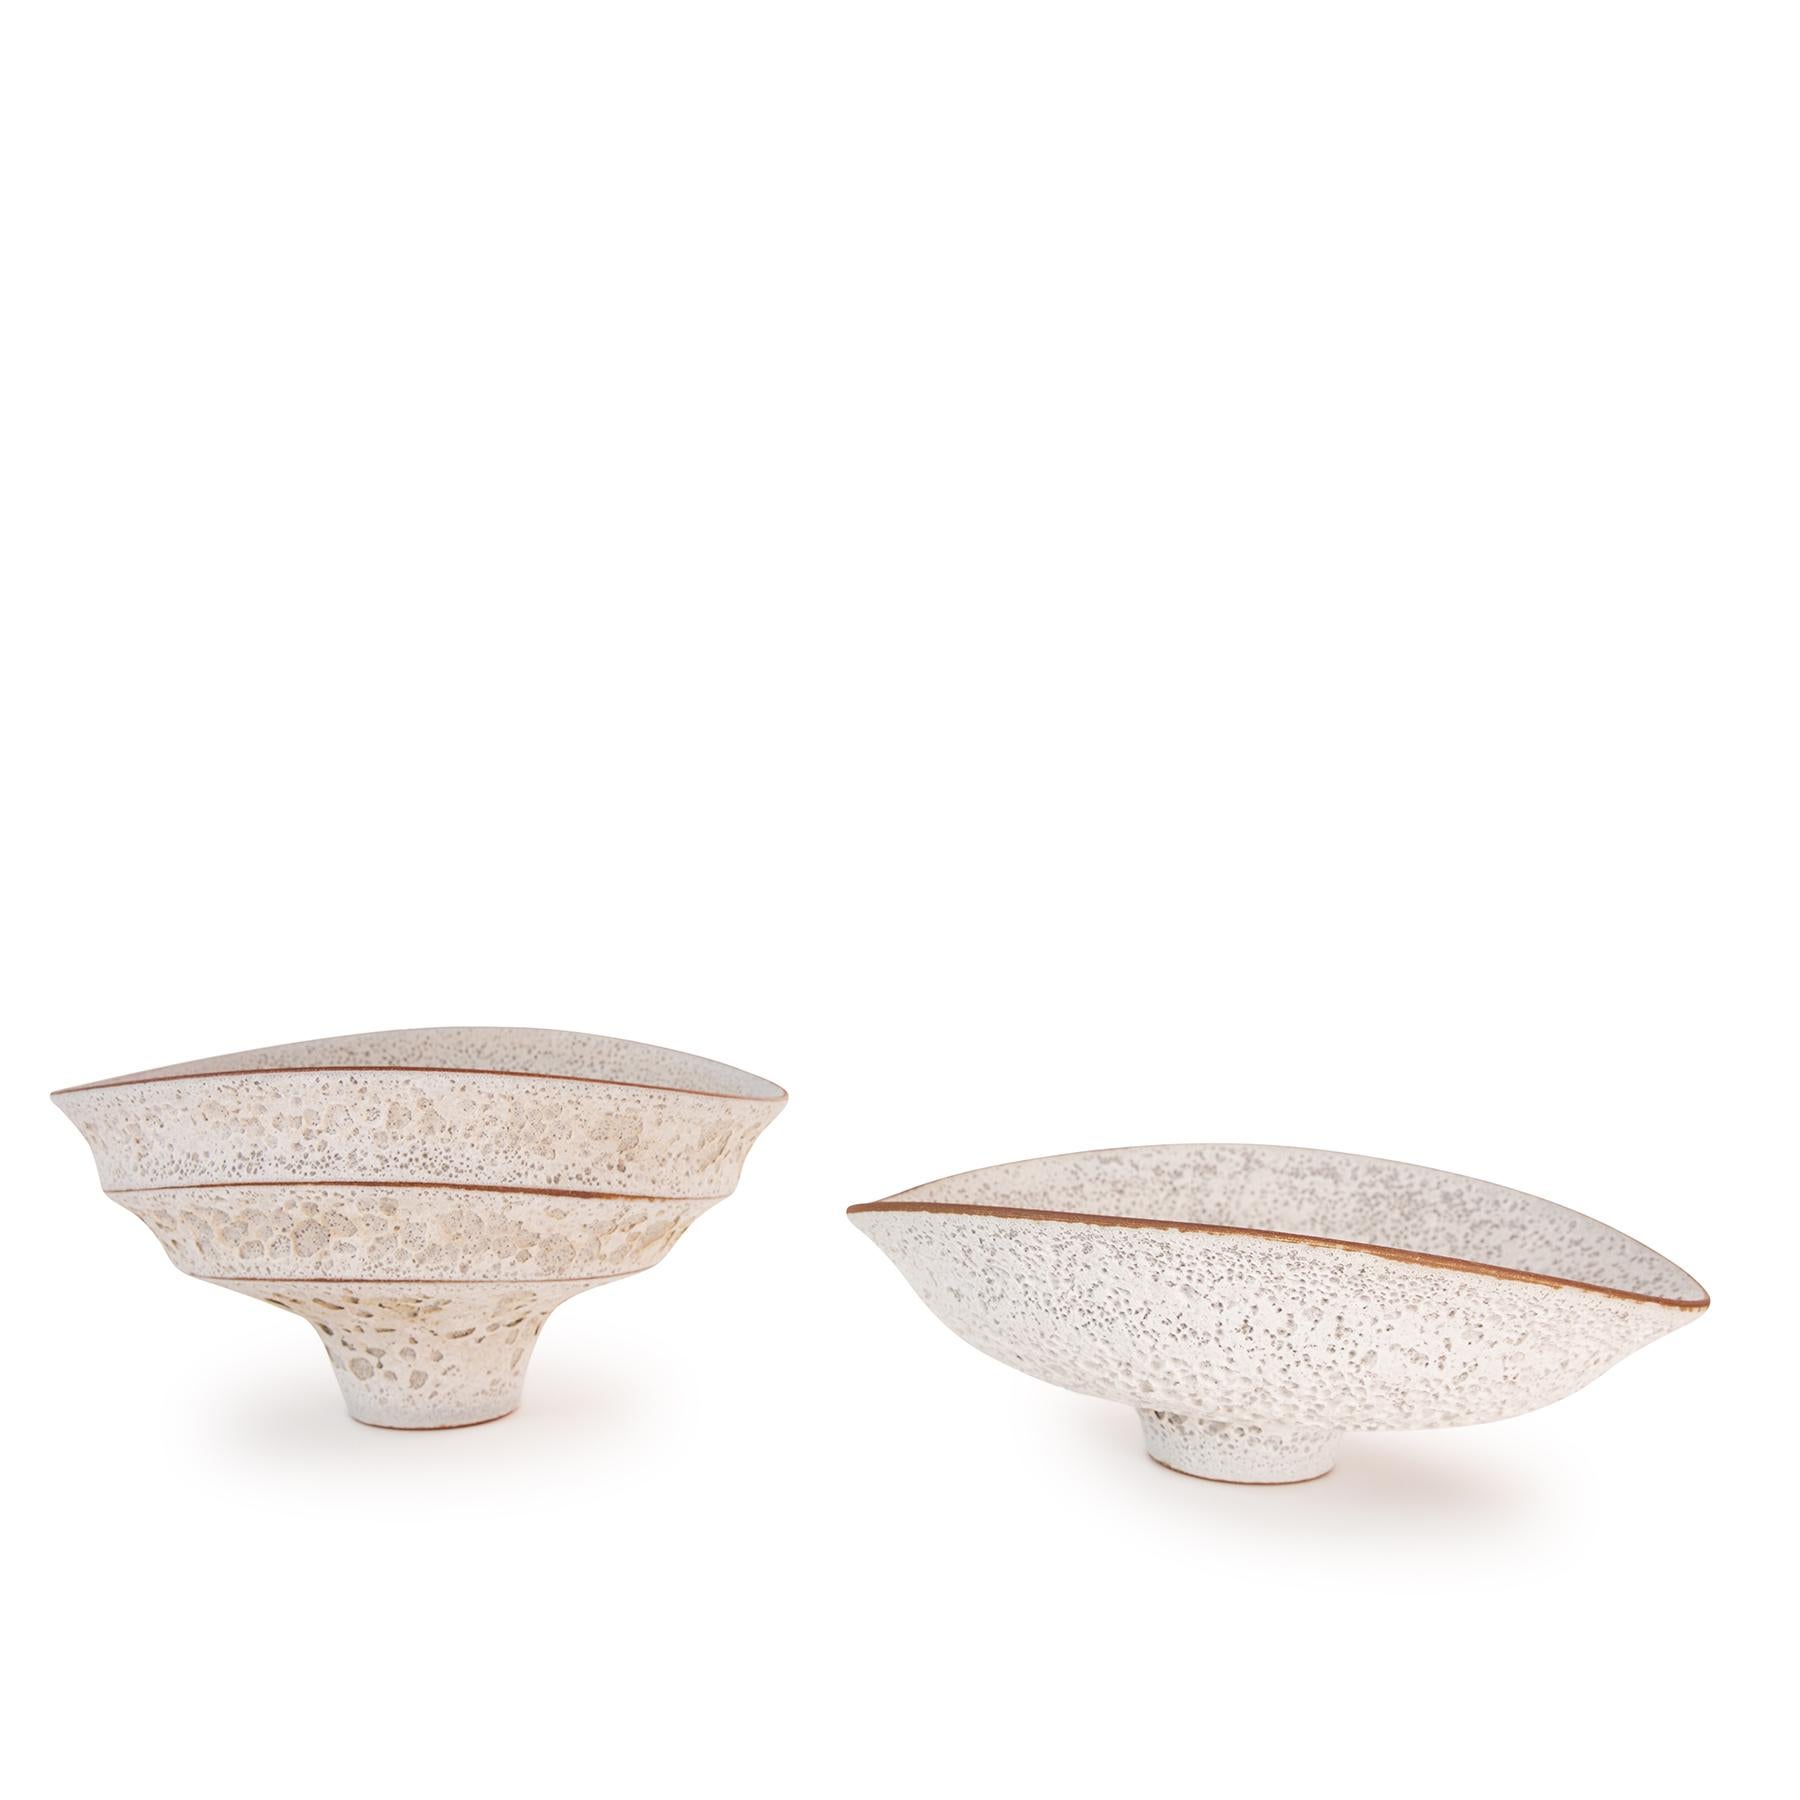 Organically-shaped large white ceramic bowl with an unusual volcanic glaze finish by Arizona artist Jeremy Briddell.